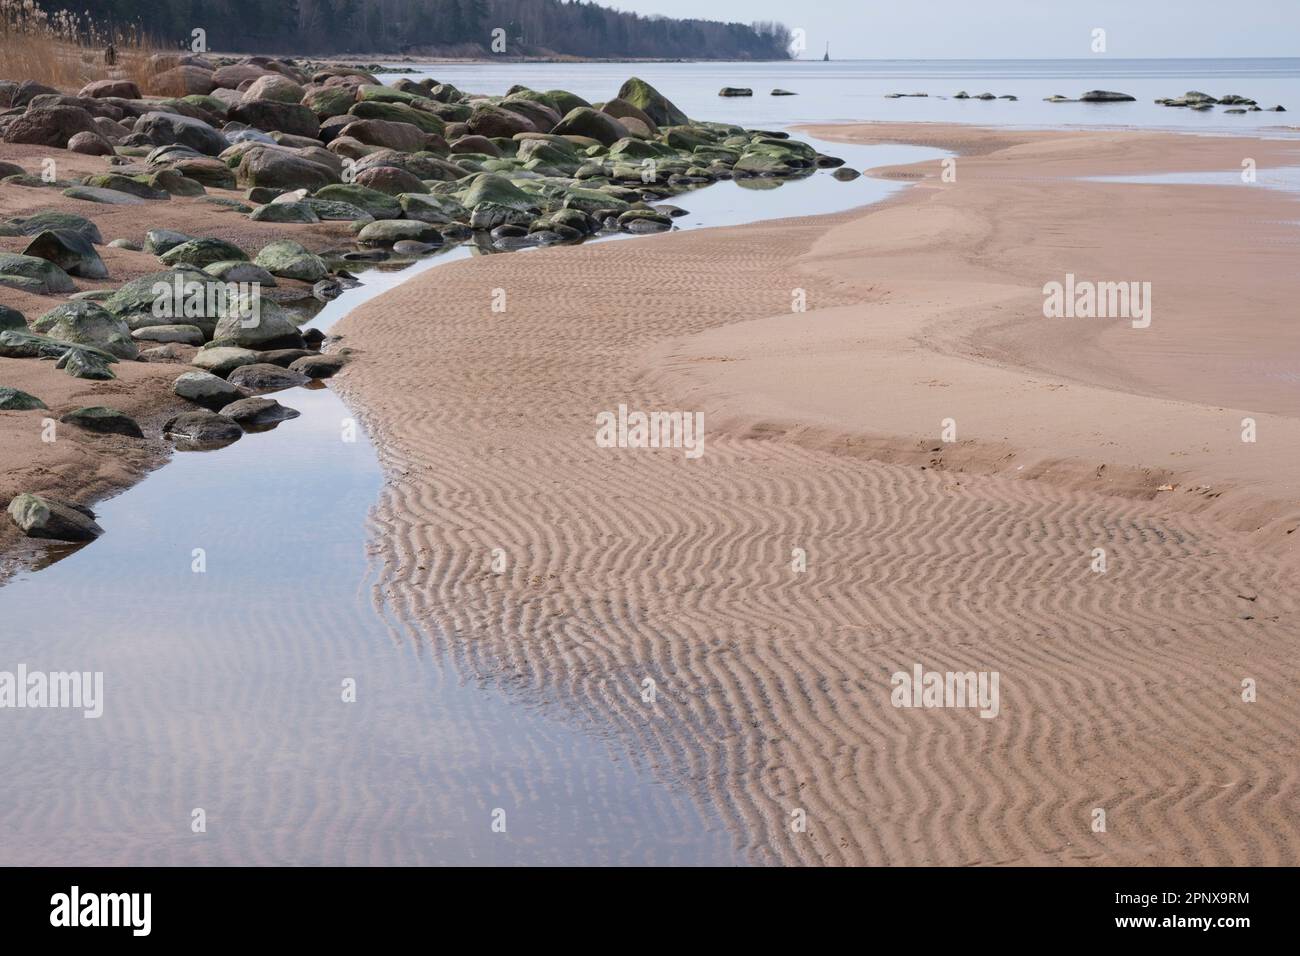 Grüne Moossteine am leeren Strand, Wellenschmuck im Sand Stockfoto